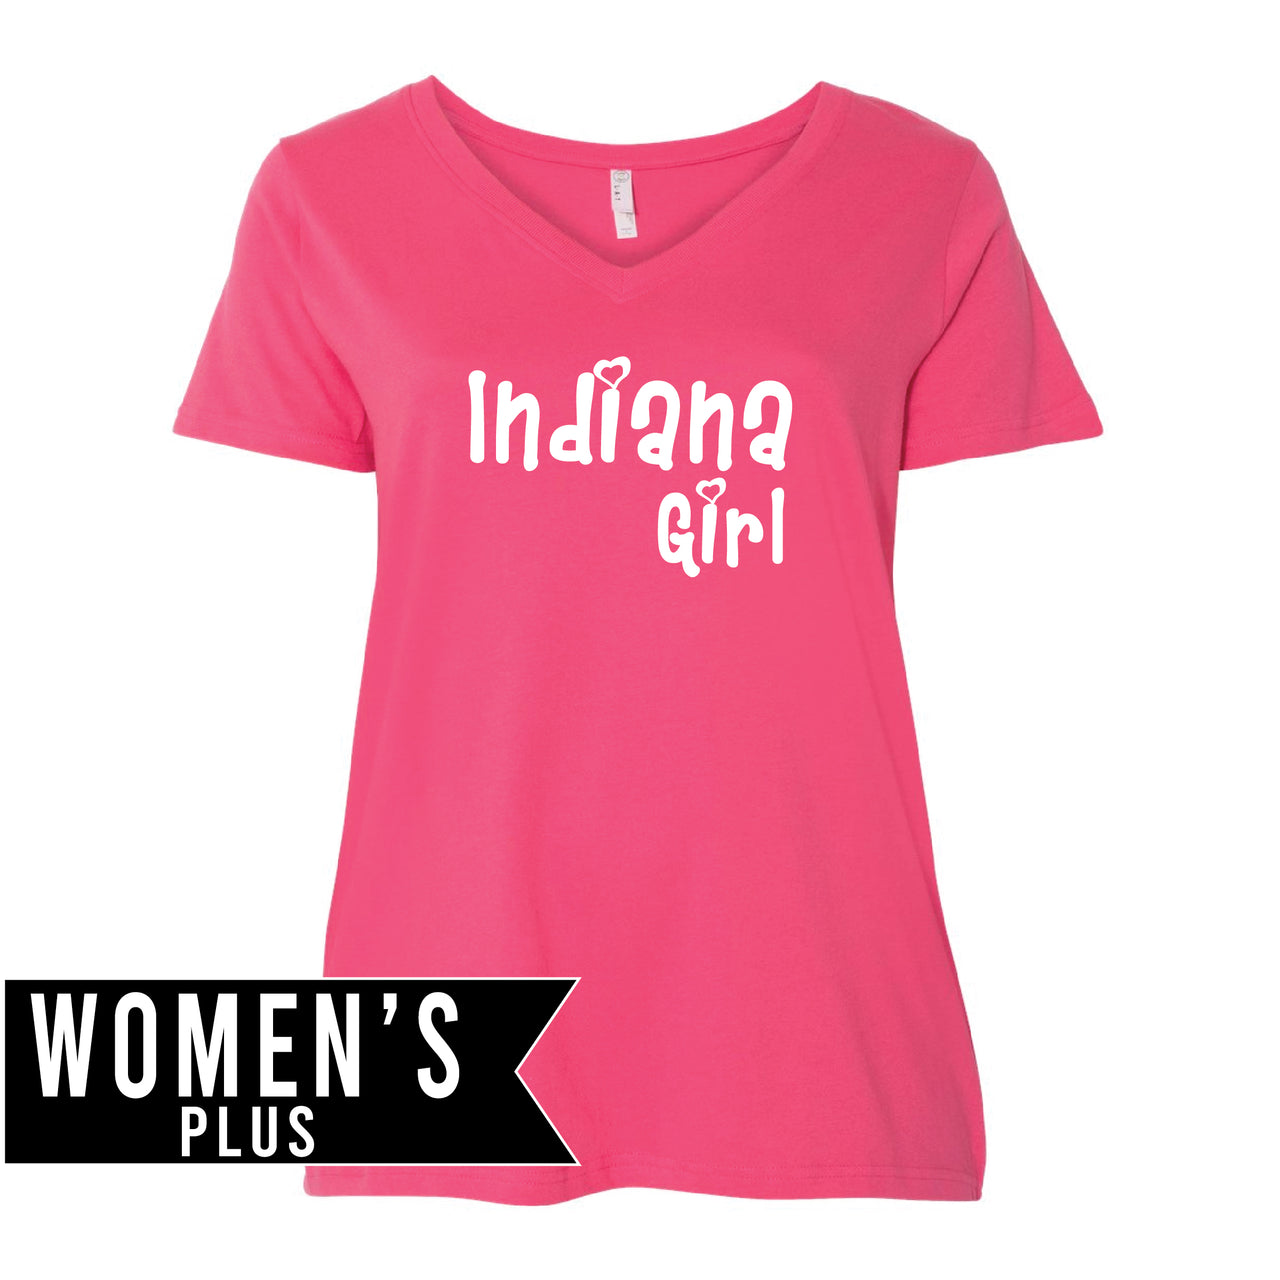 Plus Size Women's Premium Jersey V-Neck Tee - Indiana Girl